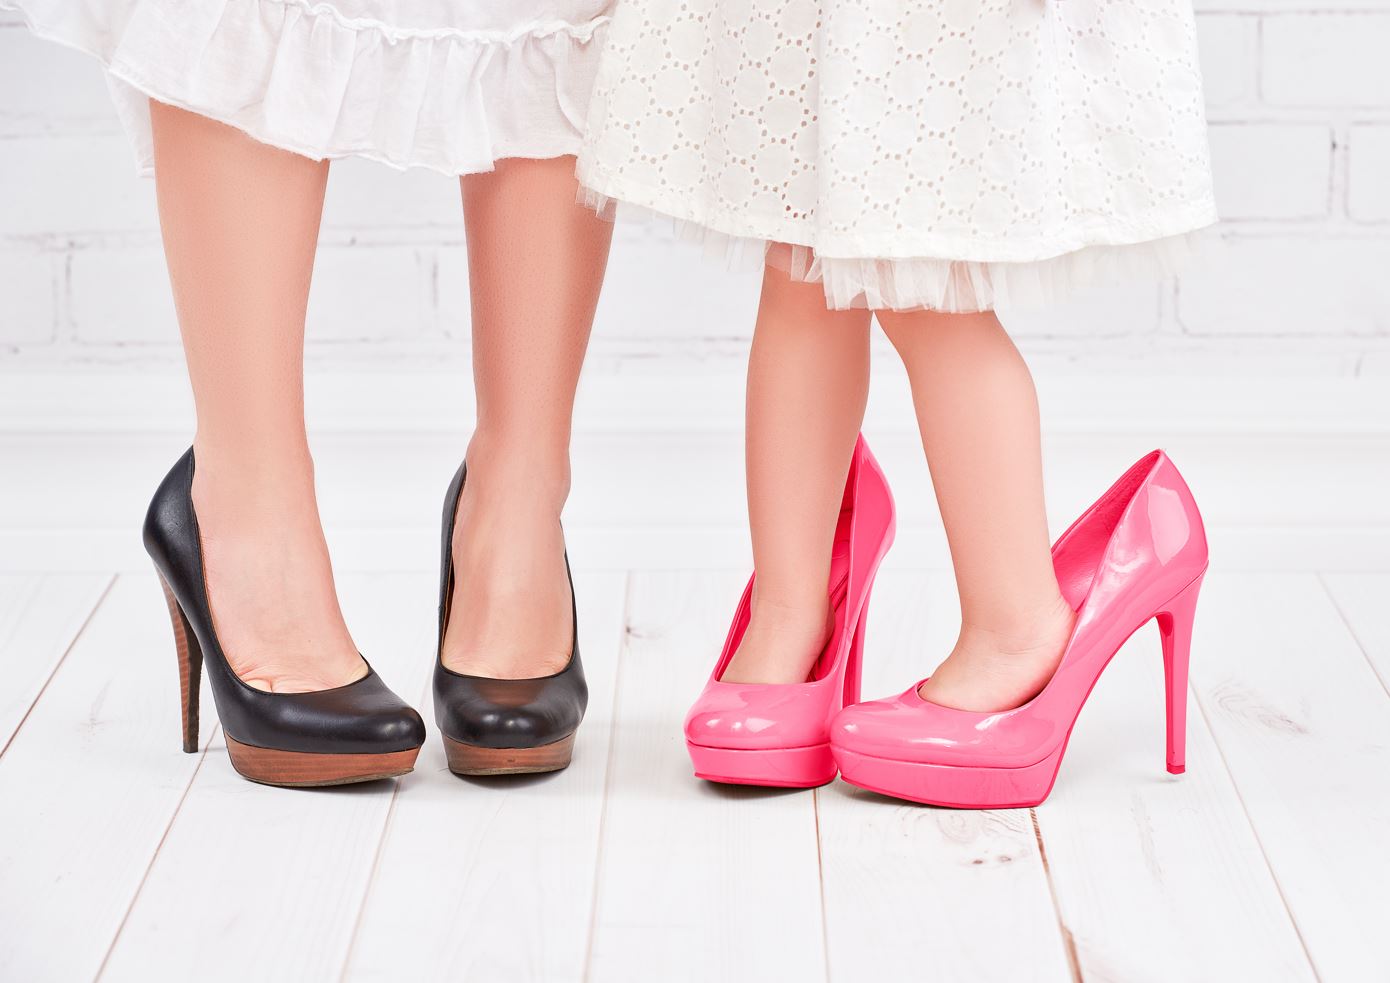 Kids size to women shoe size